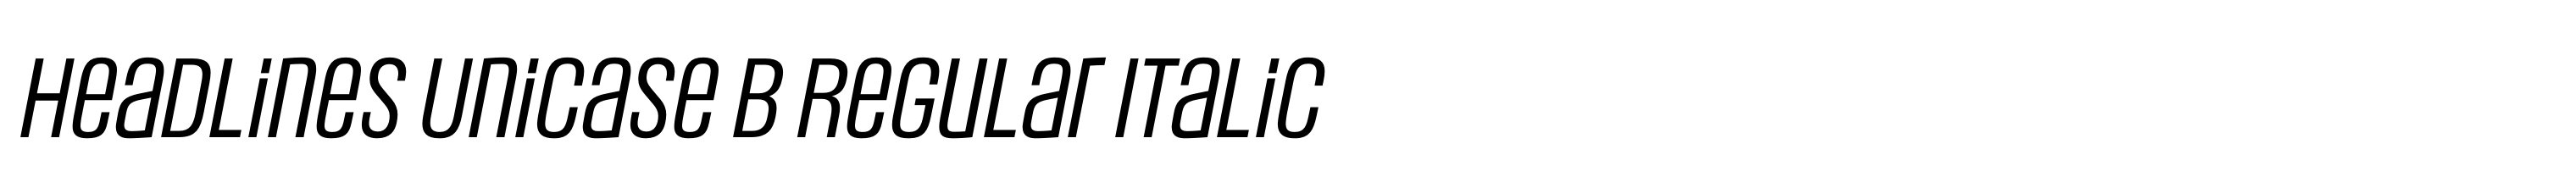 Headlines Unicase B Regular Italic